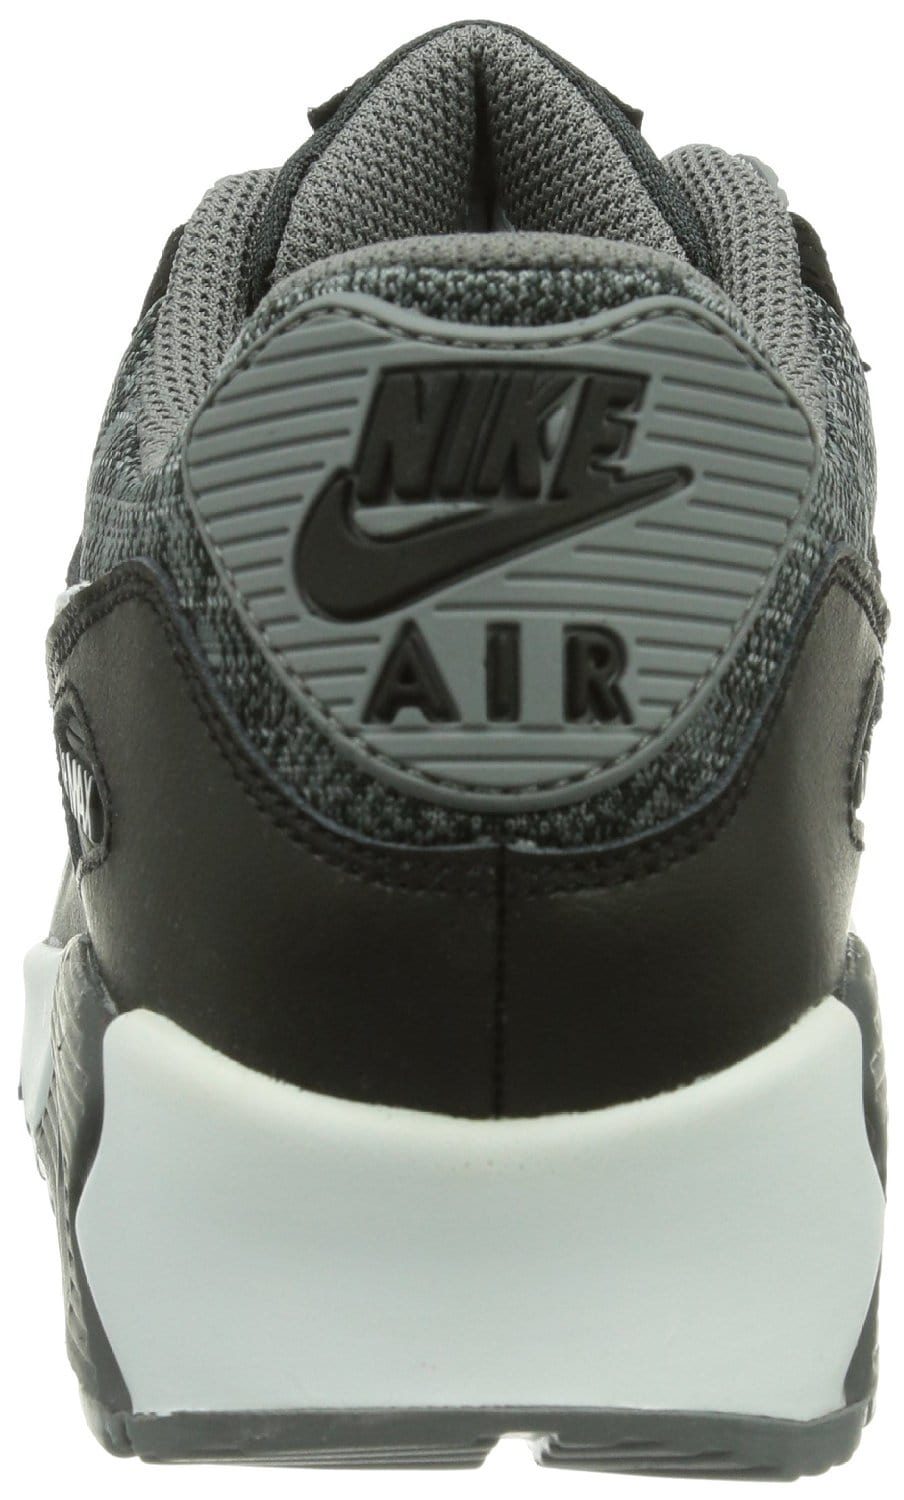 Nike Nike SB Dunk High "Hawaii" sneakers Blu (GS) Anthracite-White-Black-Cool Grey - JuzsportsShops